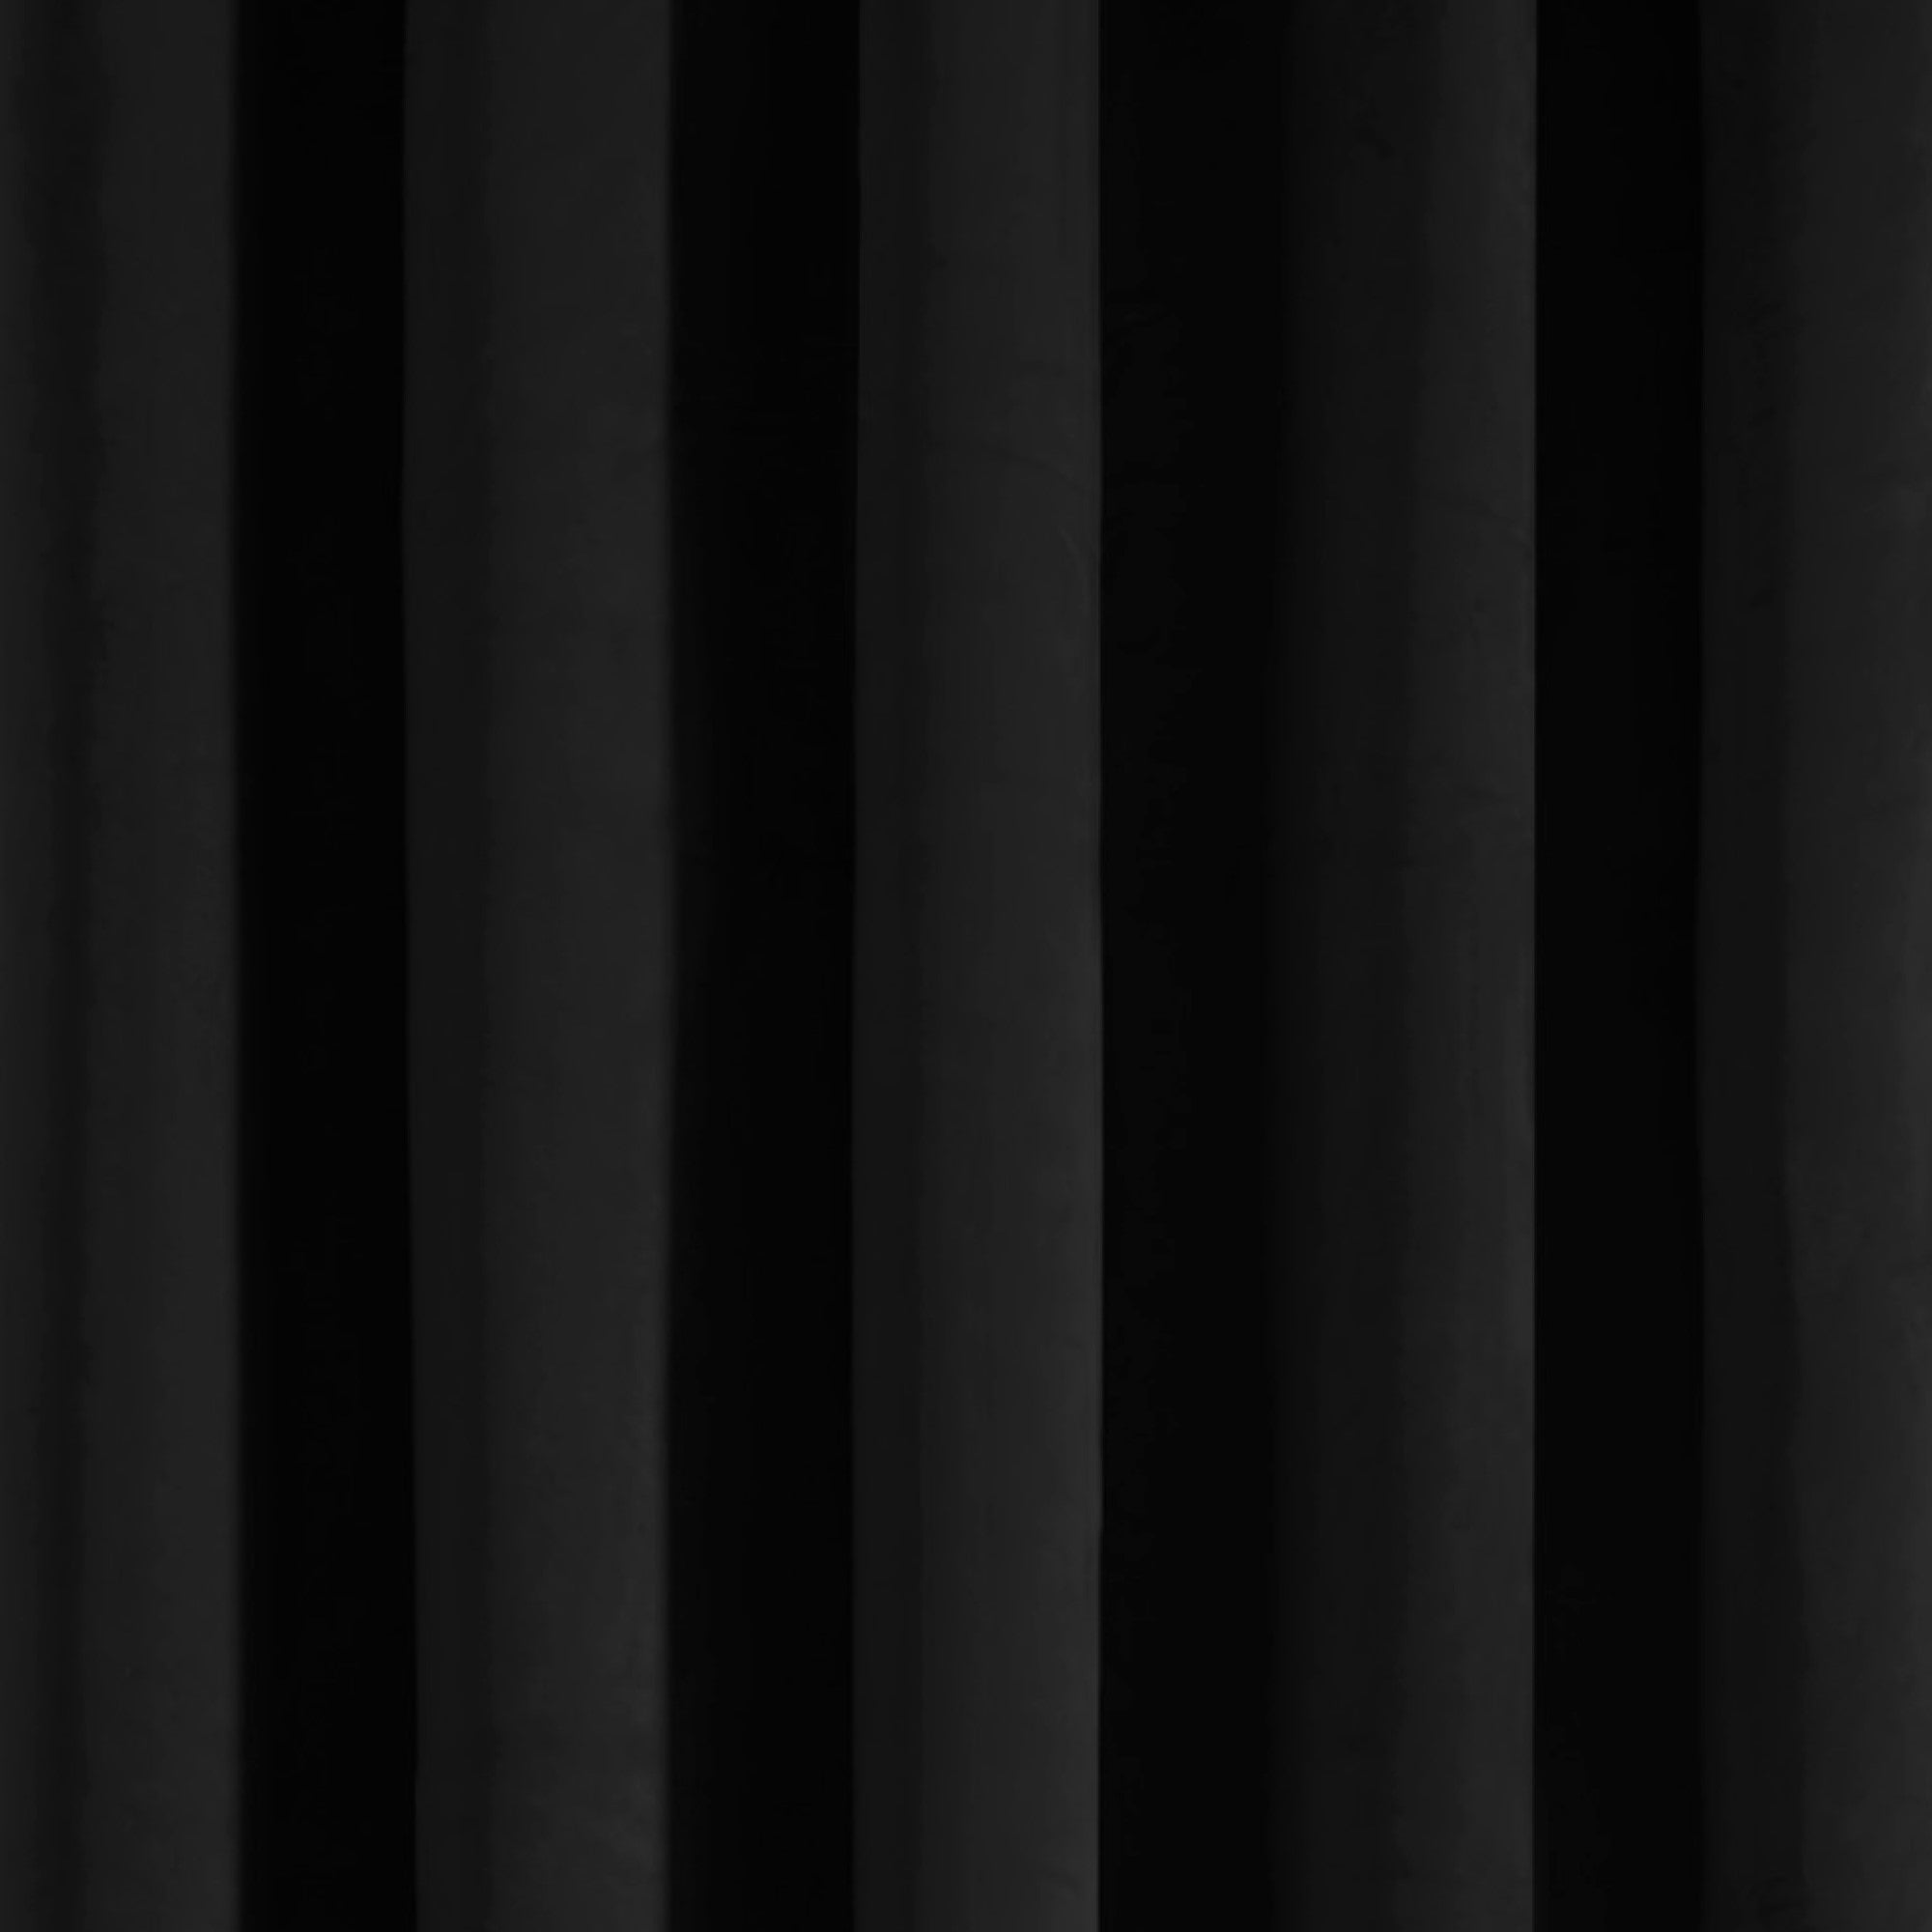 Eyelet Single Panel Door Curtain Montrose by Laurence Llewelyn-Bowen in Black